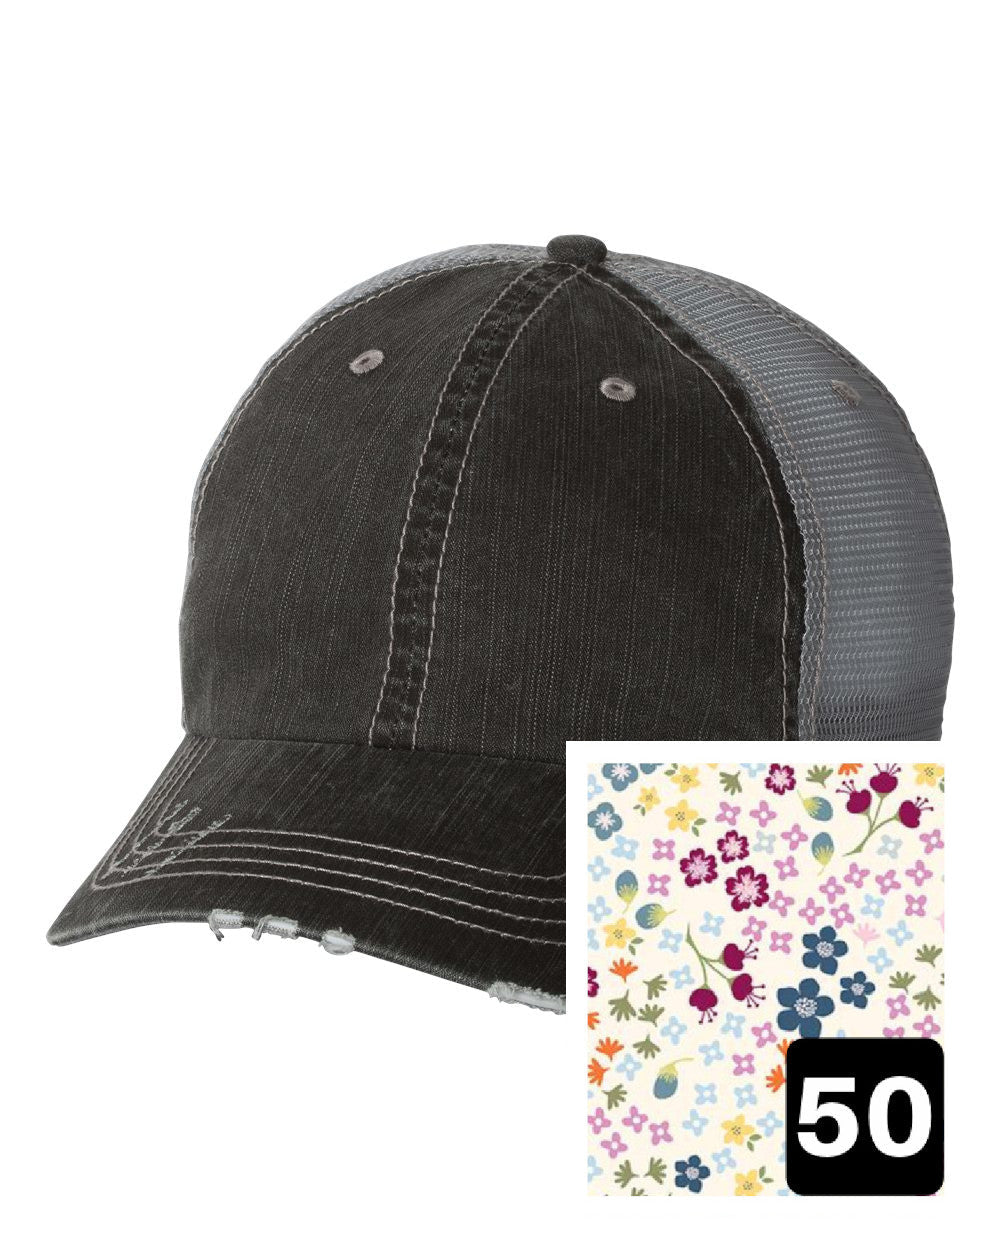 gray distressed trucker hat with gray geometric fabric state of Arizona